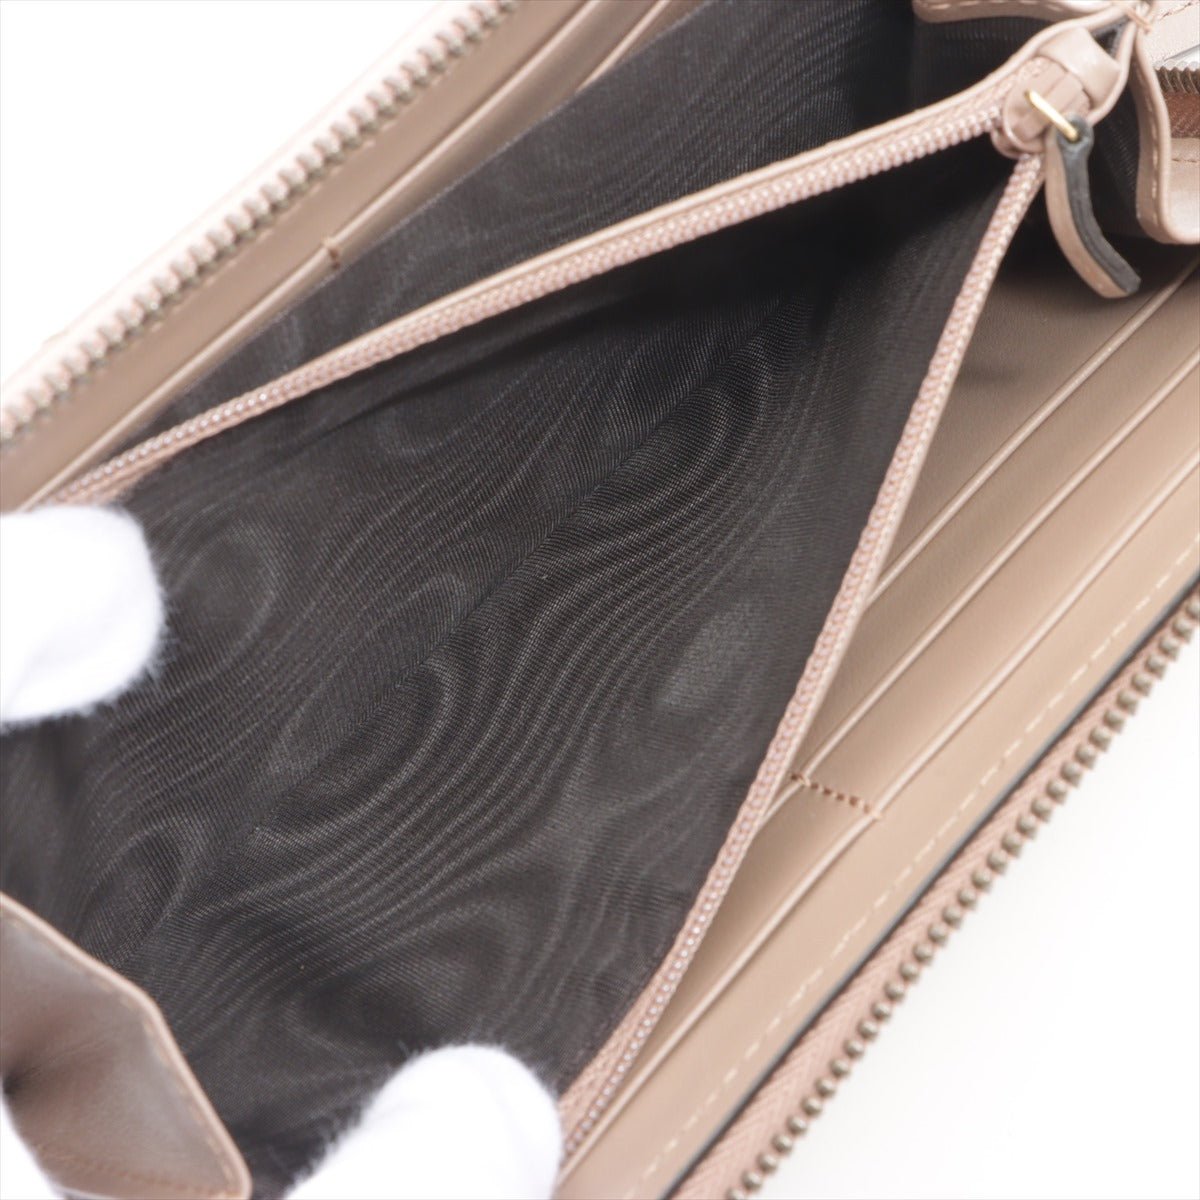 Ergo Bag In Coachtopia Leather With Cherry Print | Coachtopia ™